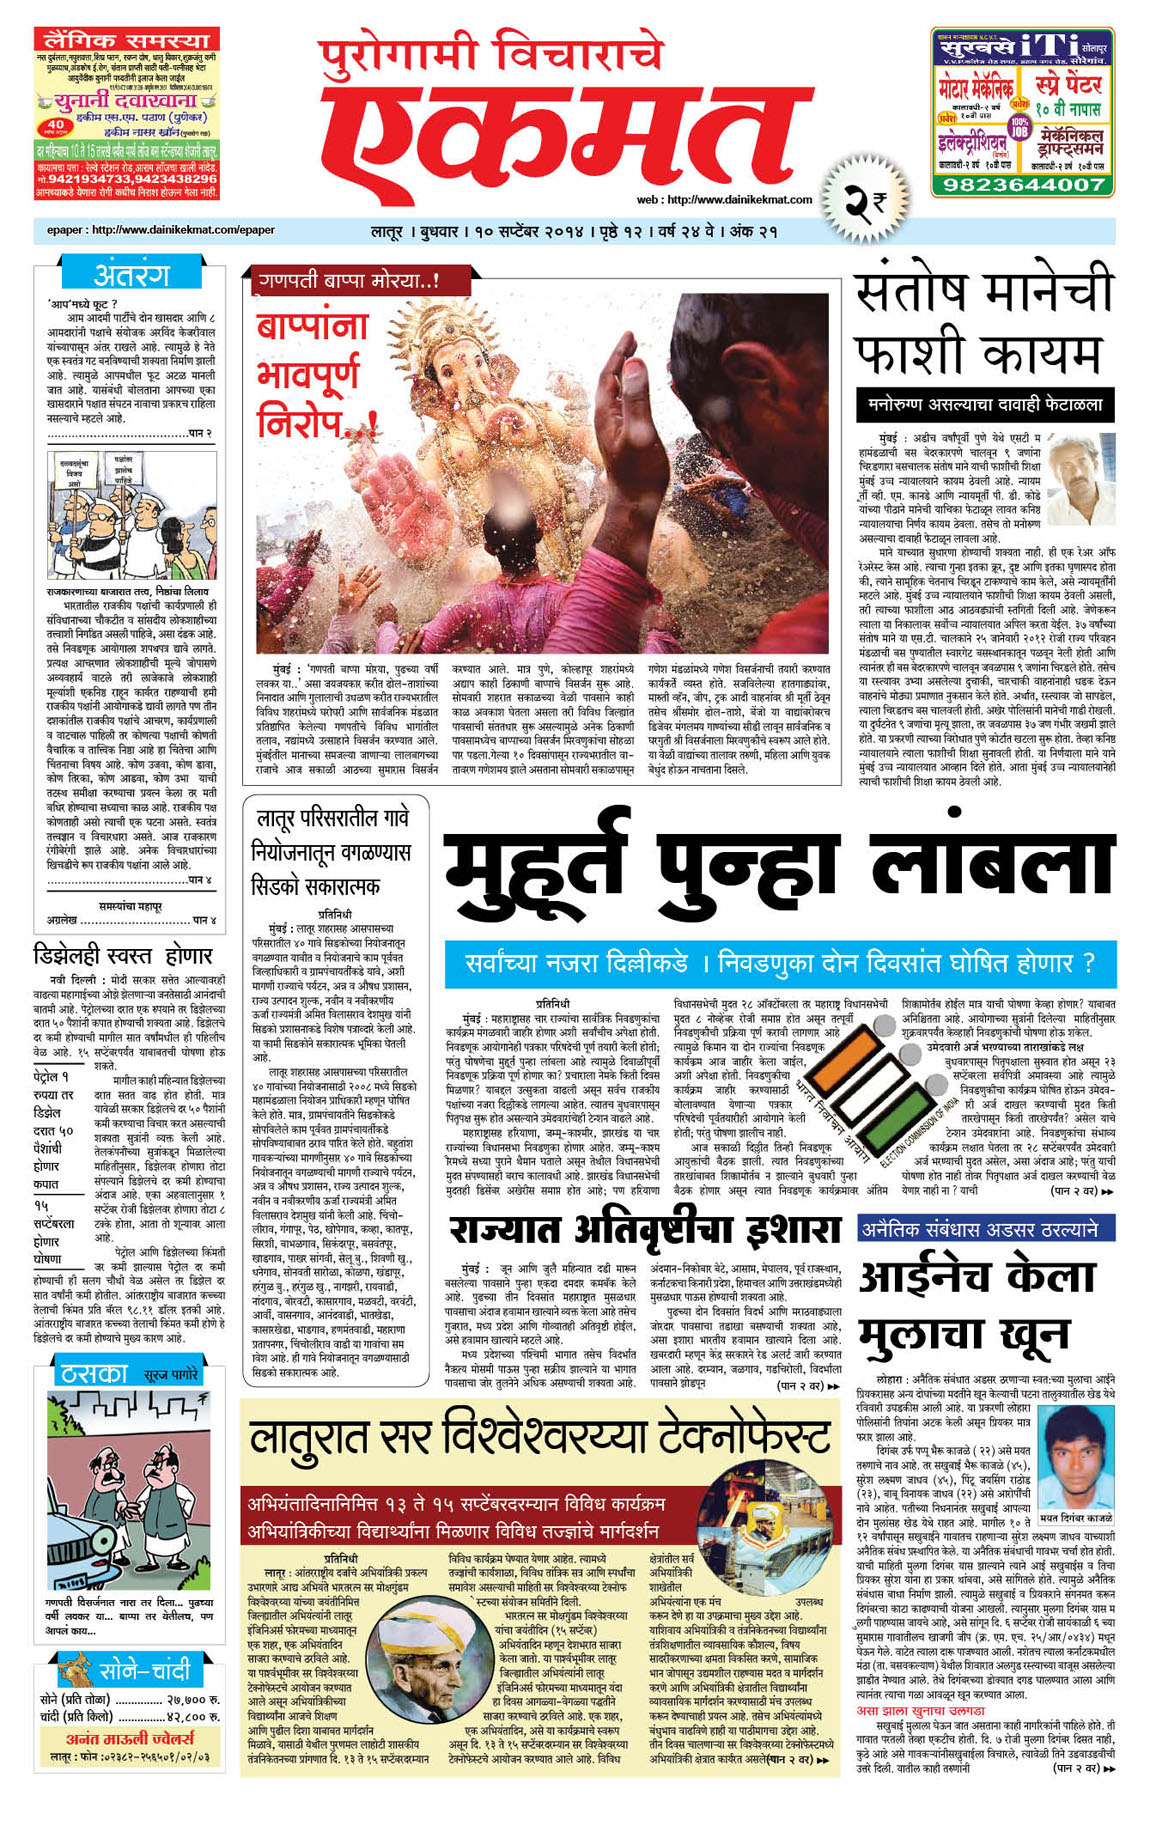 marathi news paper